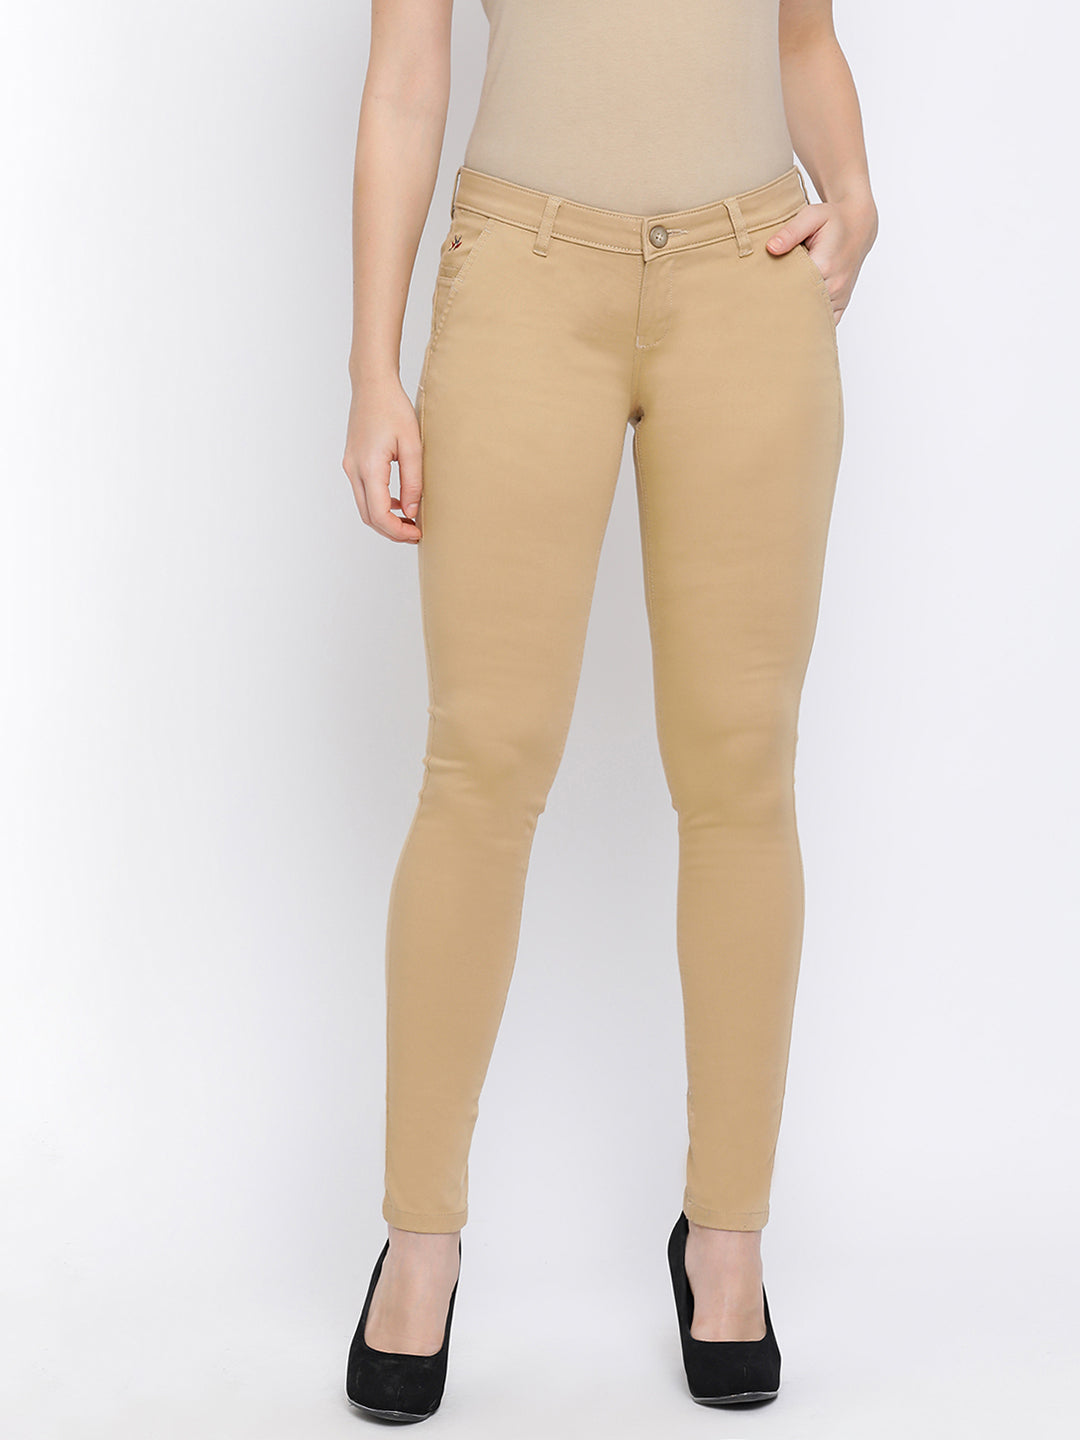 Khaki Denim Slim fit Trousers - Women Trousers